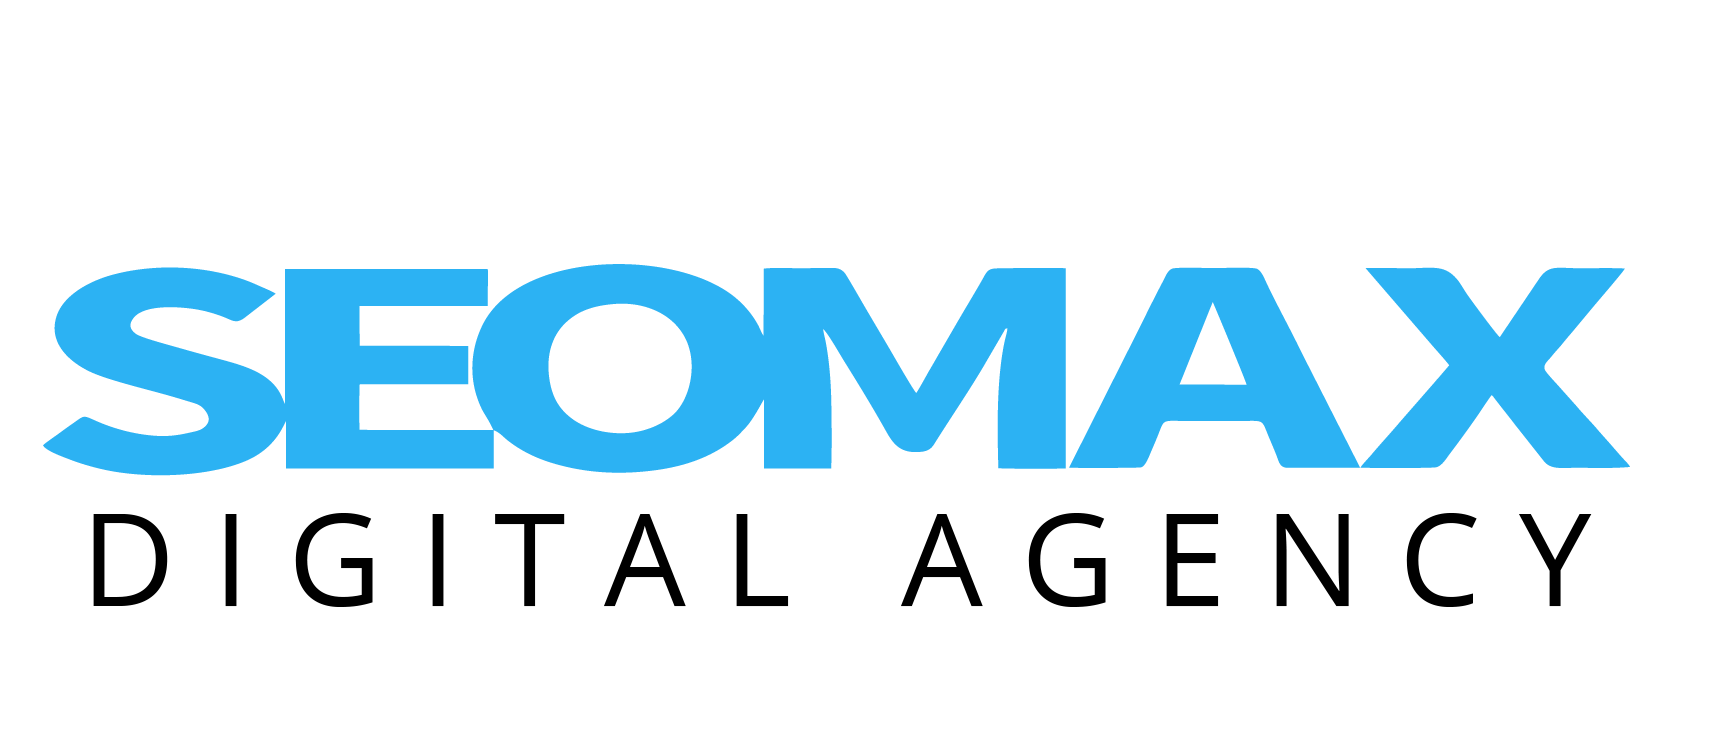 Digital agency SEOMAX profile on Qualified.One